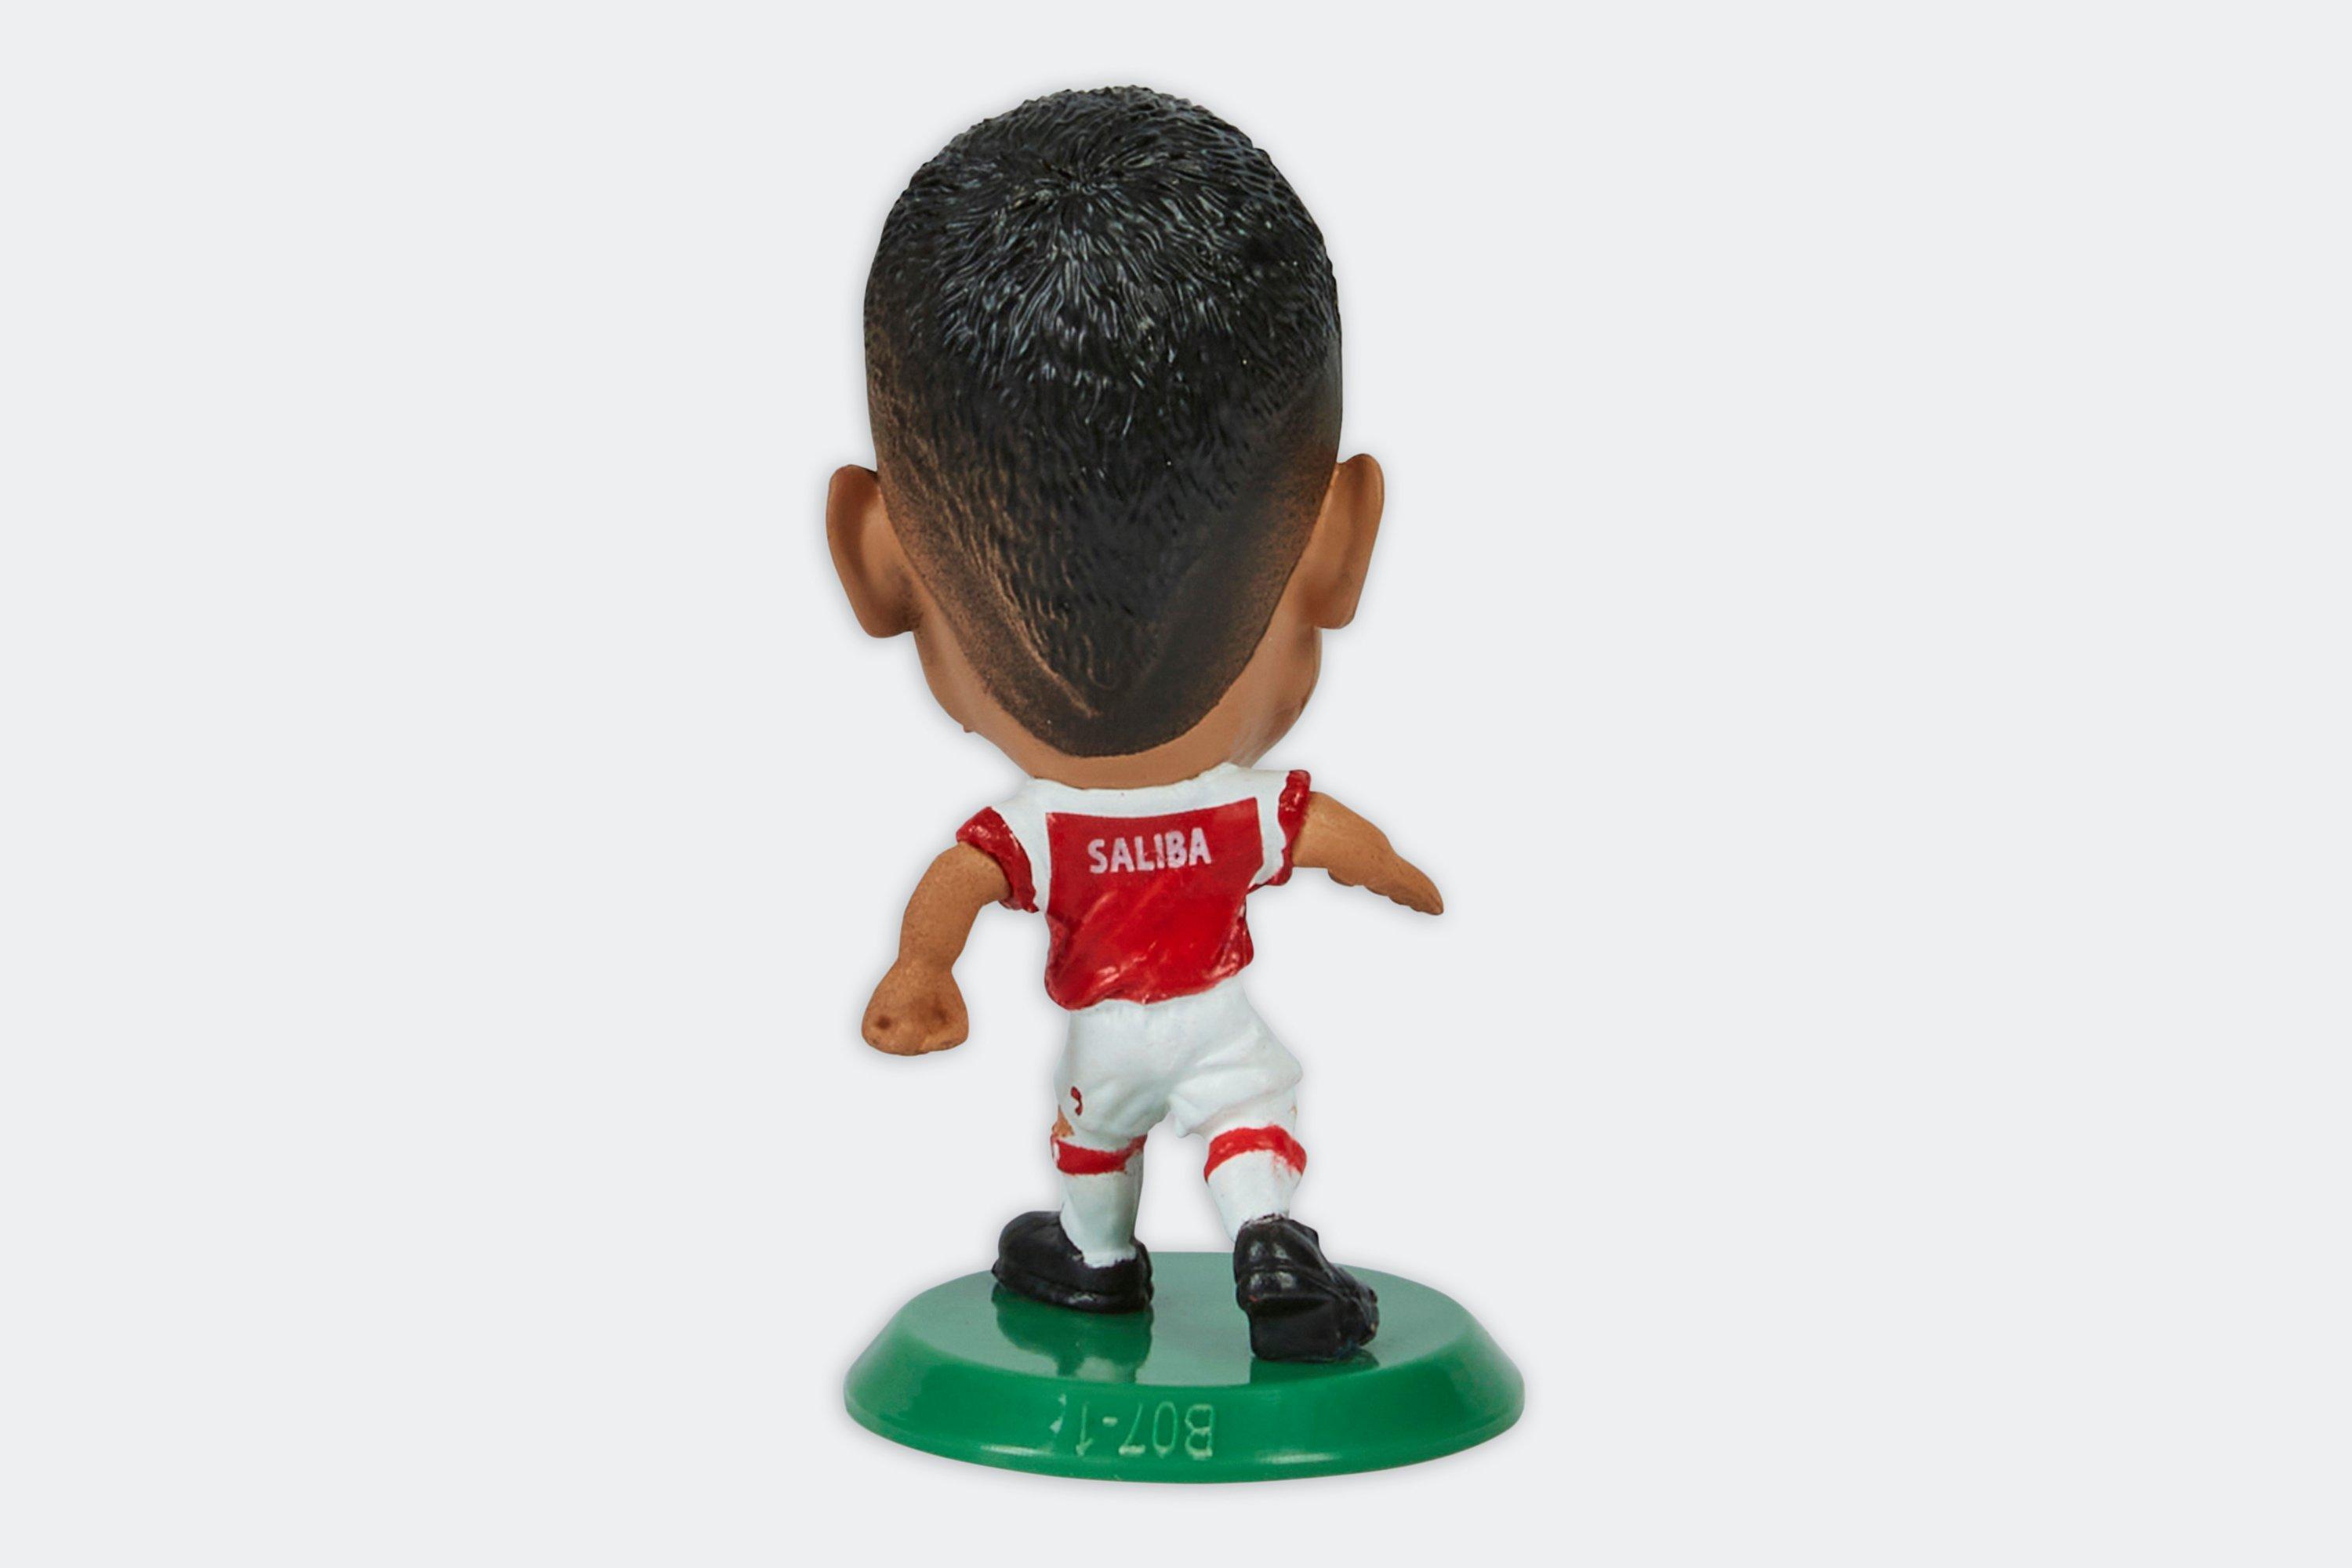 Arsenal FC William Saliba SoccerStarz Football Figurine